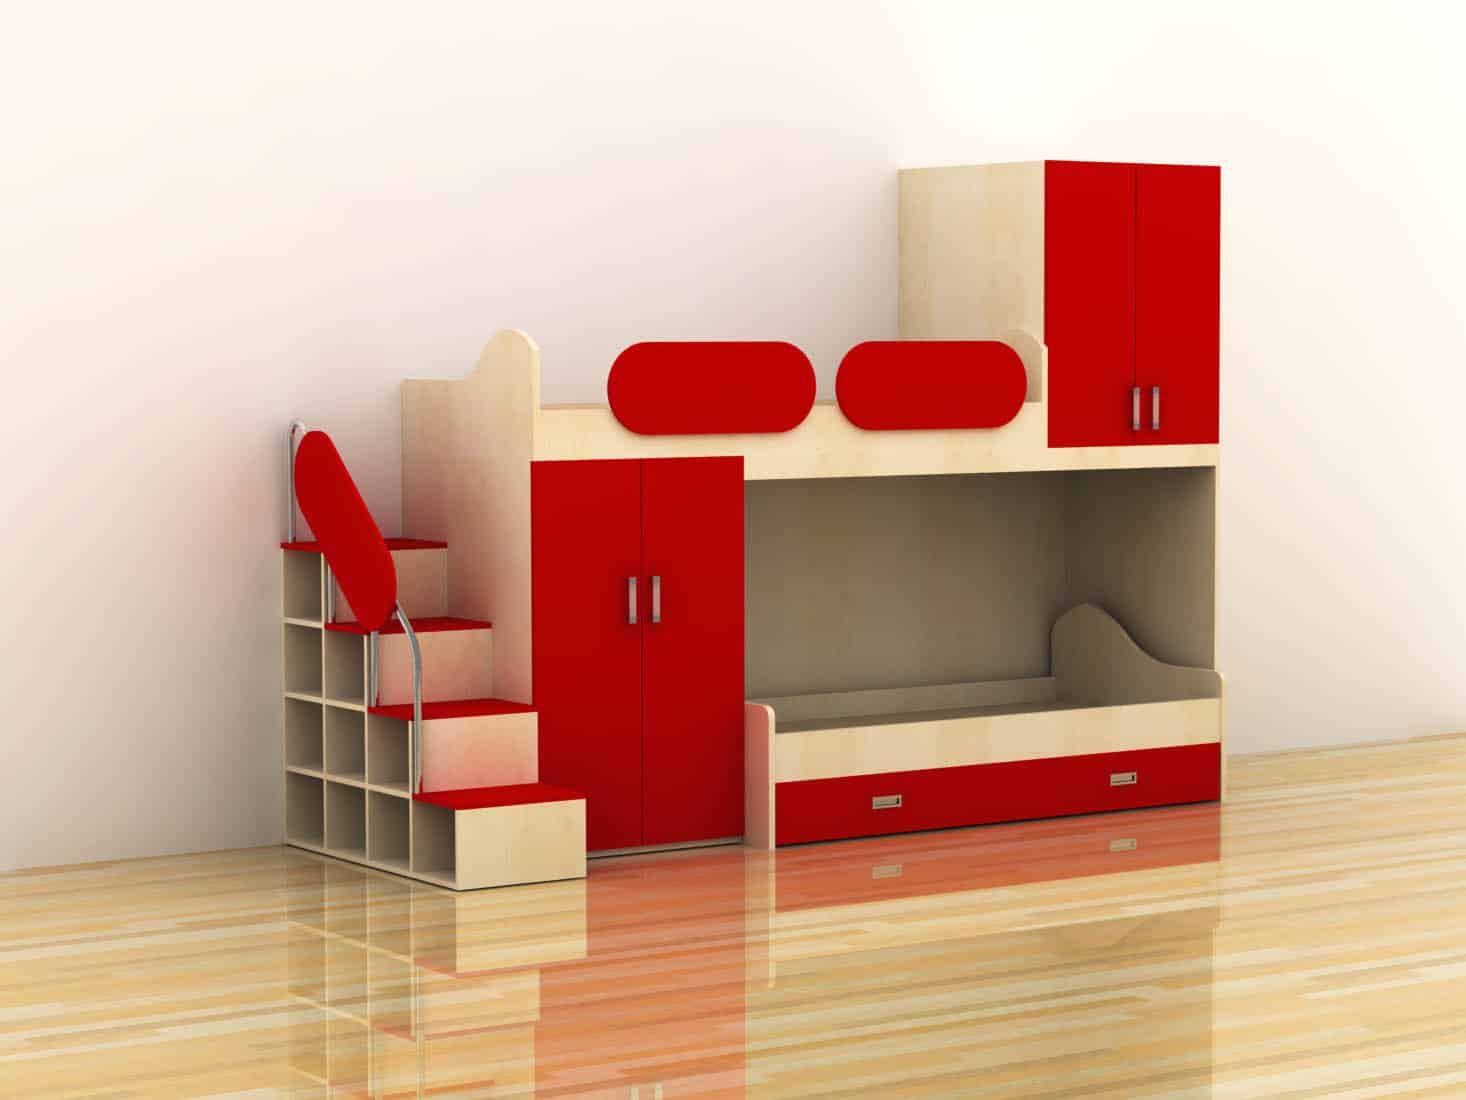 21 Modern Kids Furniture Ideas & Designs -DesignBump